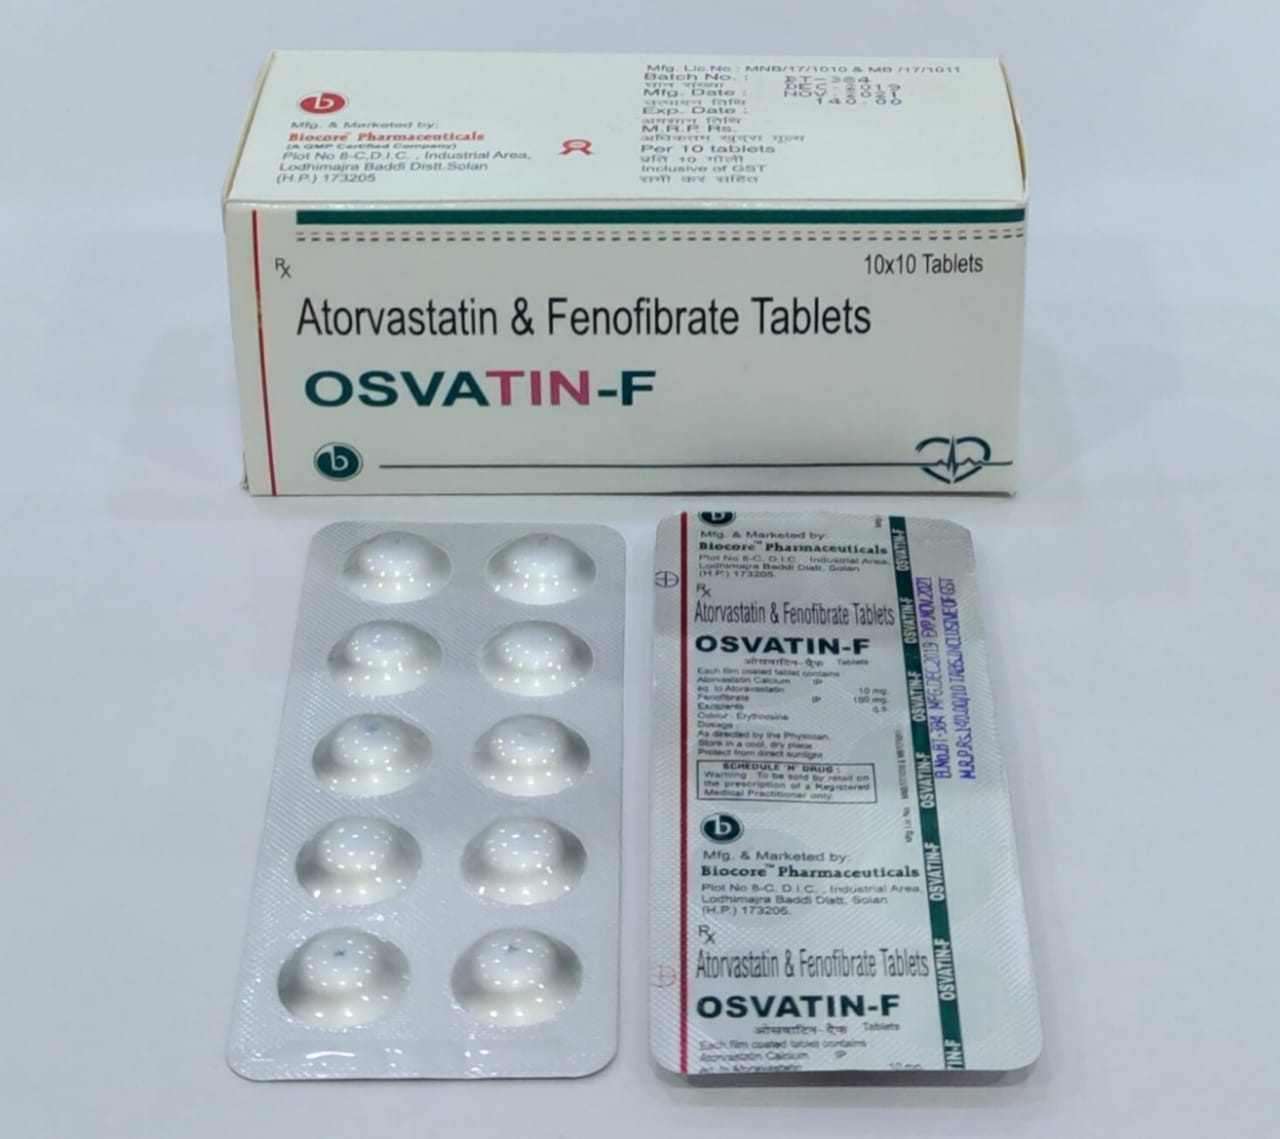 OSVATIN-F Tablets